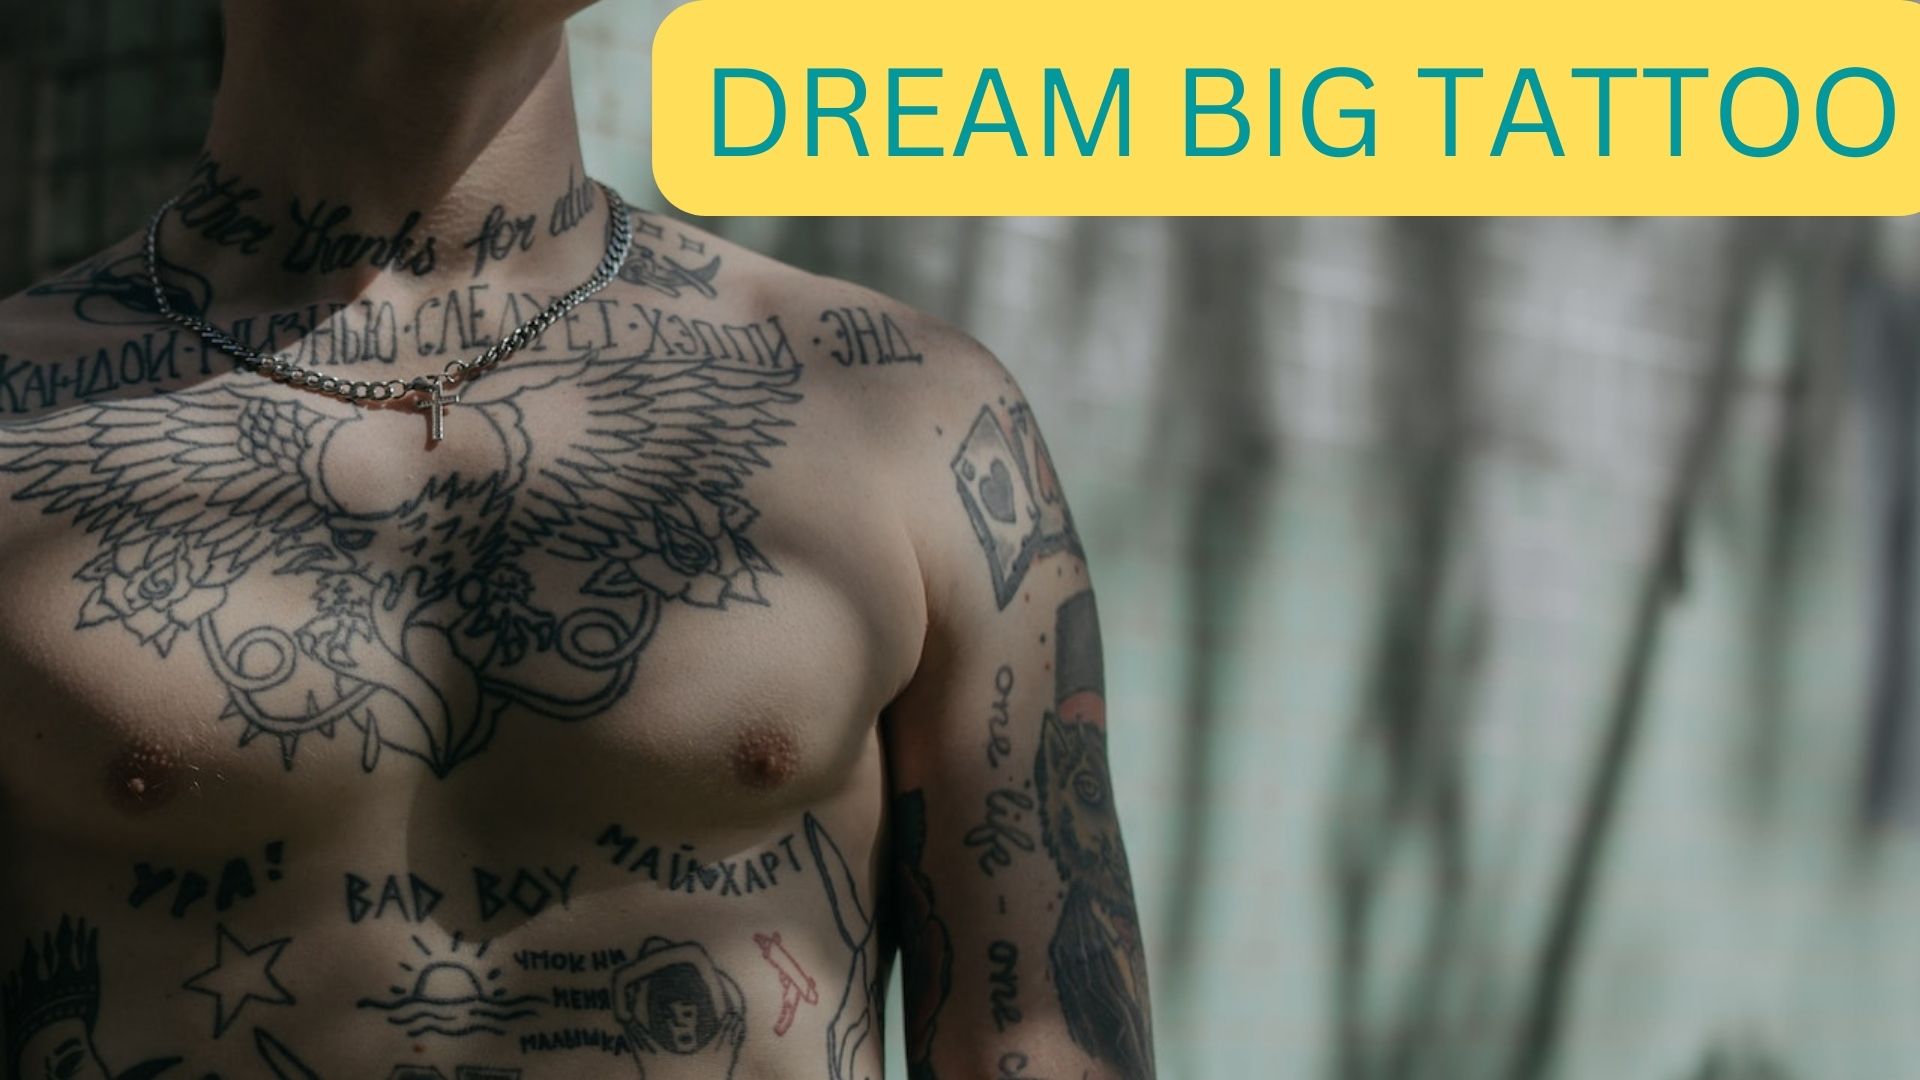 Dream Big Tattoo - Symbolizes Sensuality, Envy, Individuality, And Change